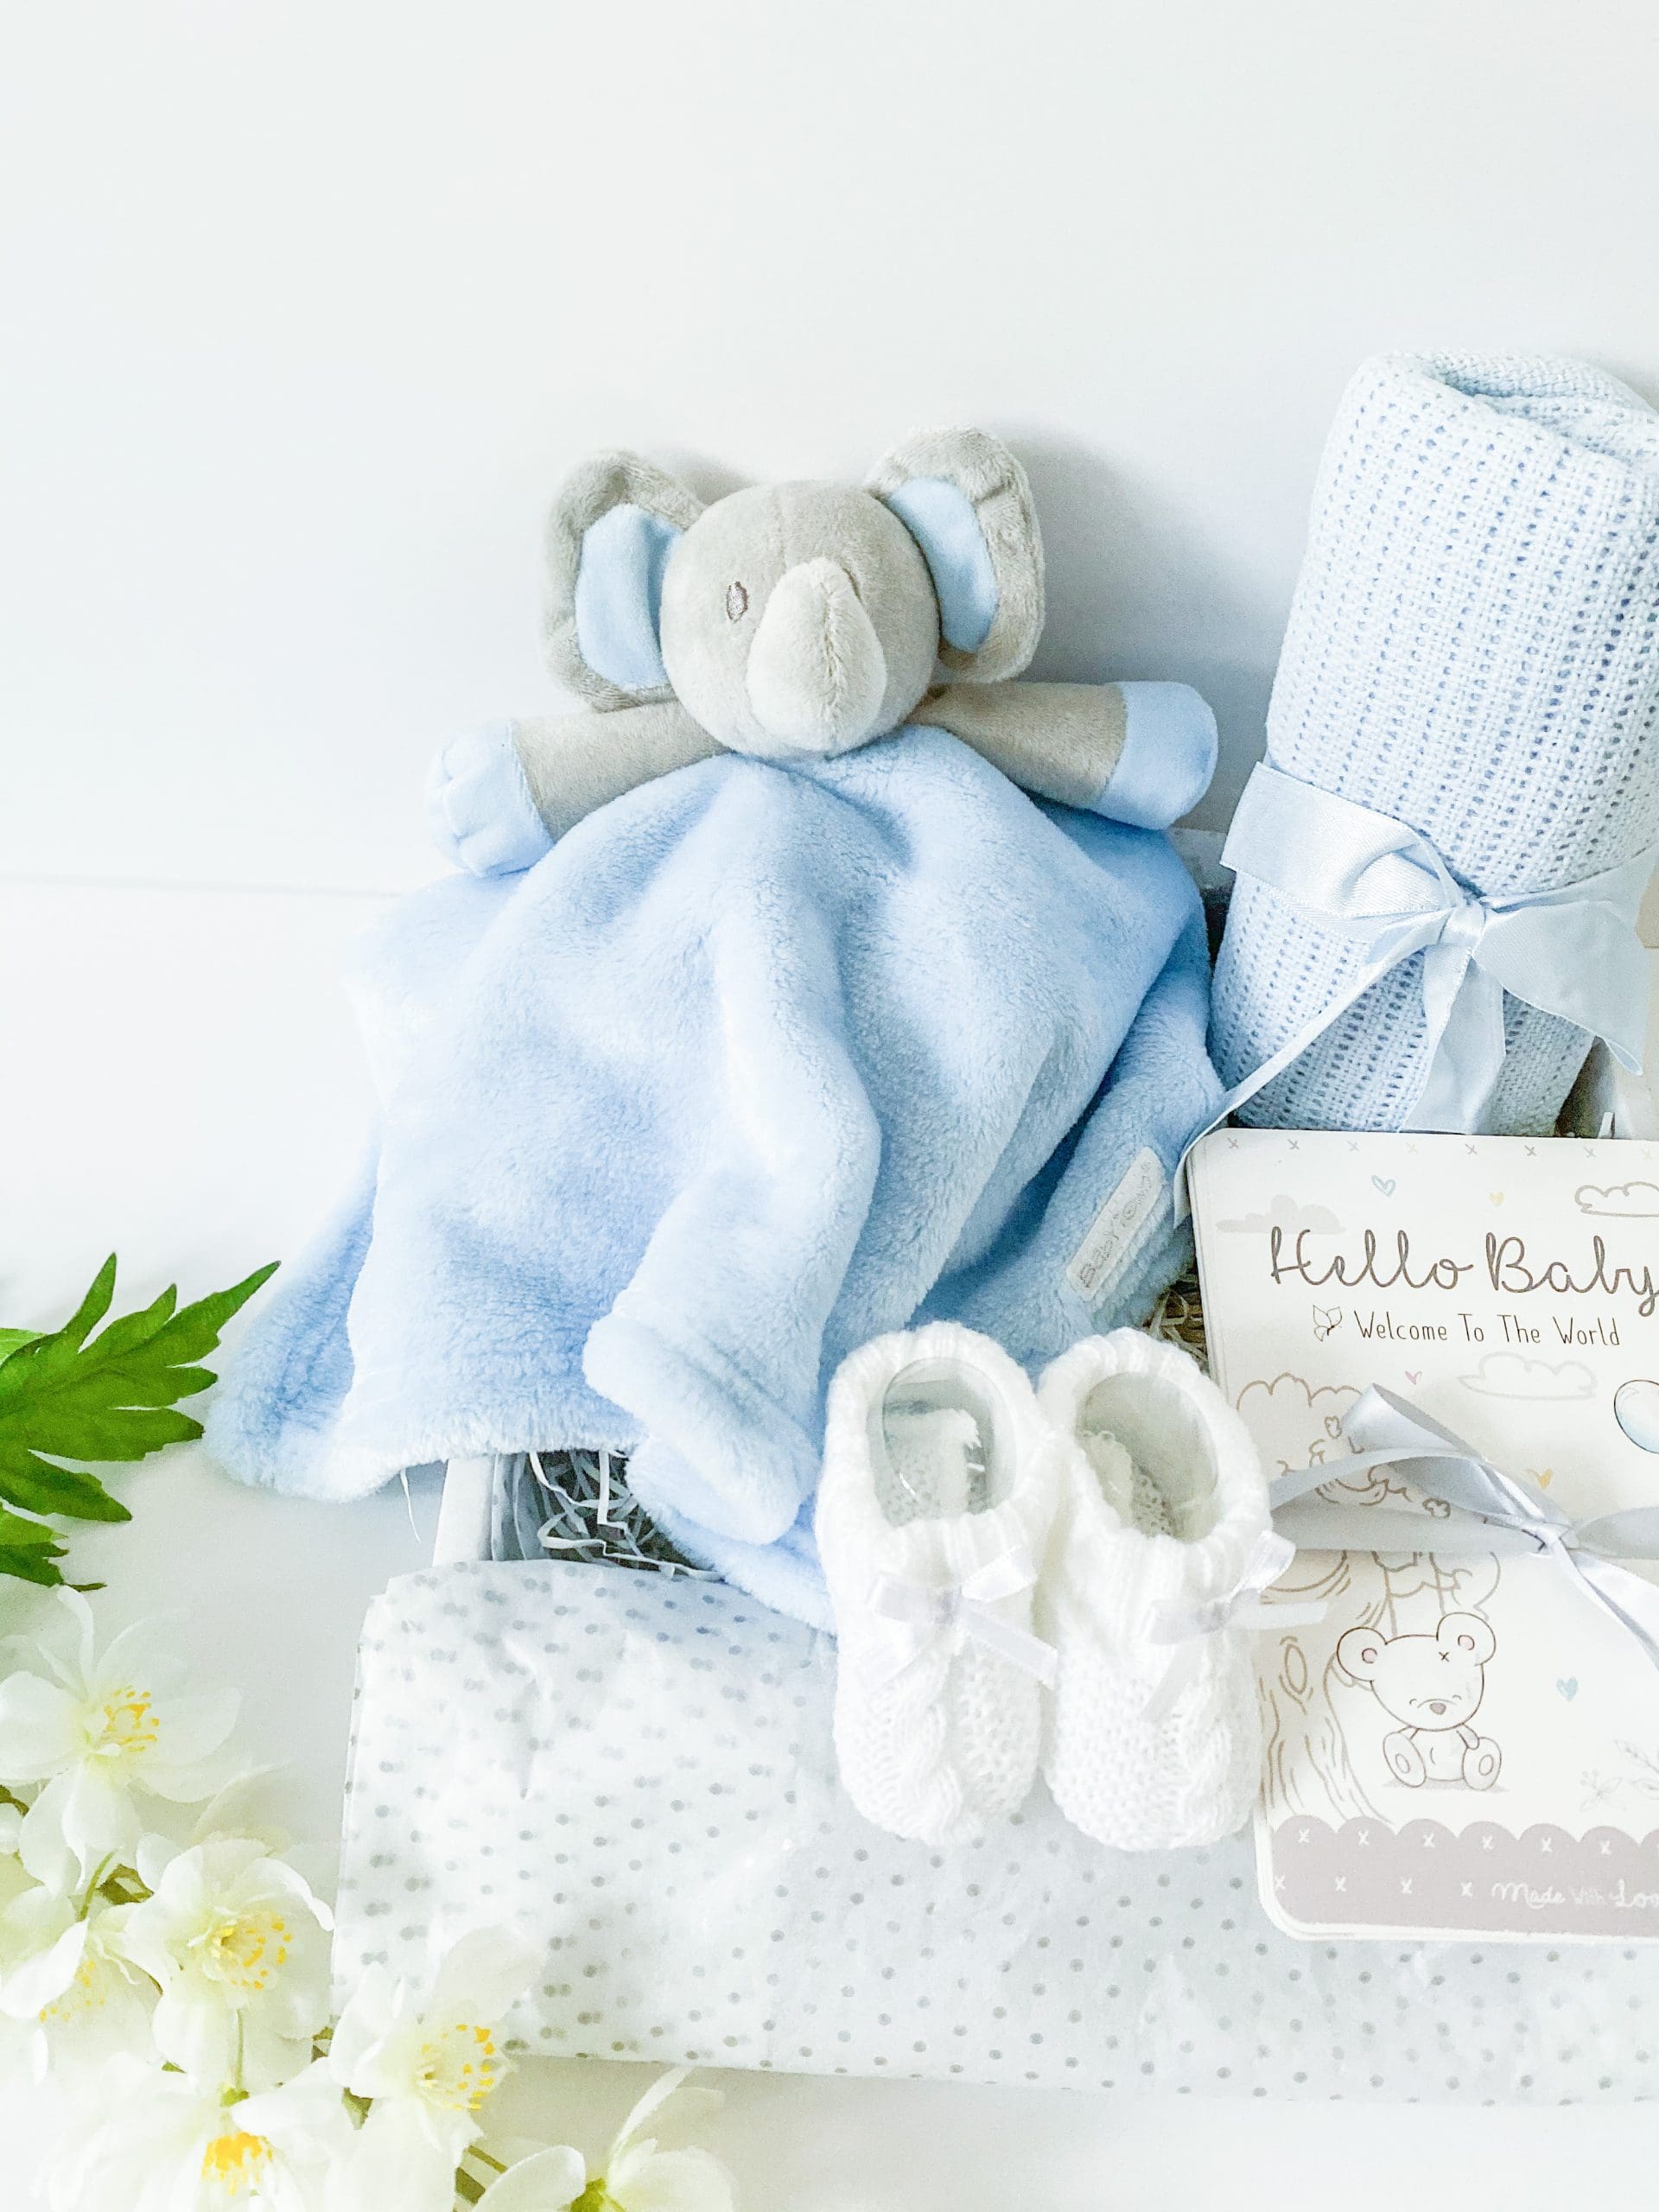 Blue Elephant baby comforter gift set